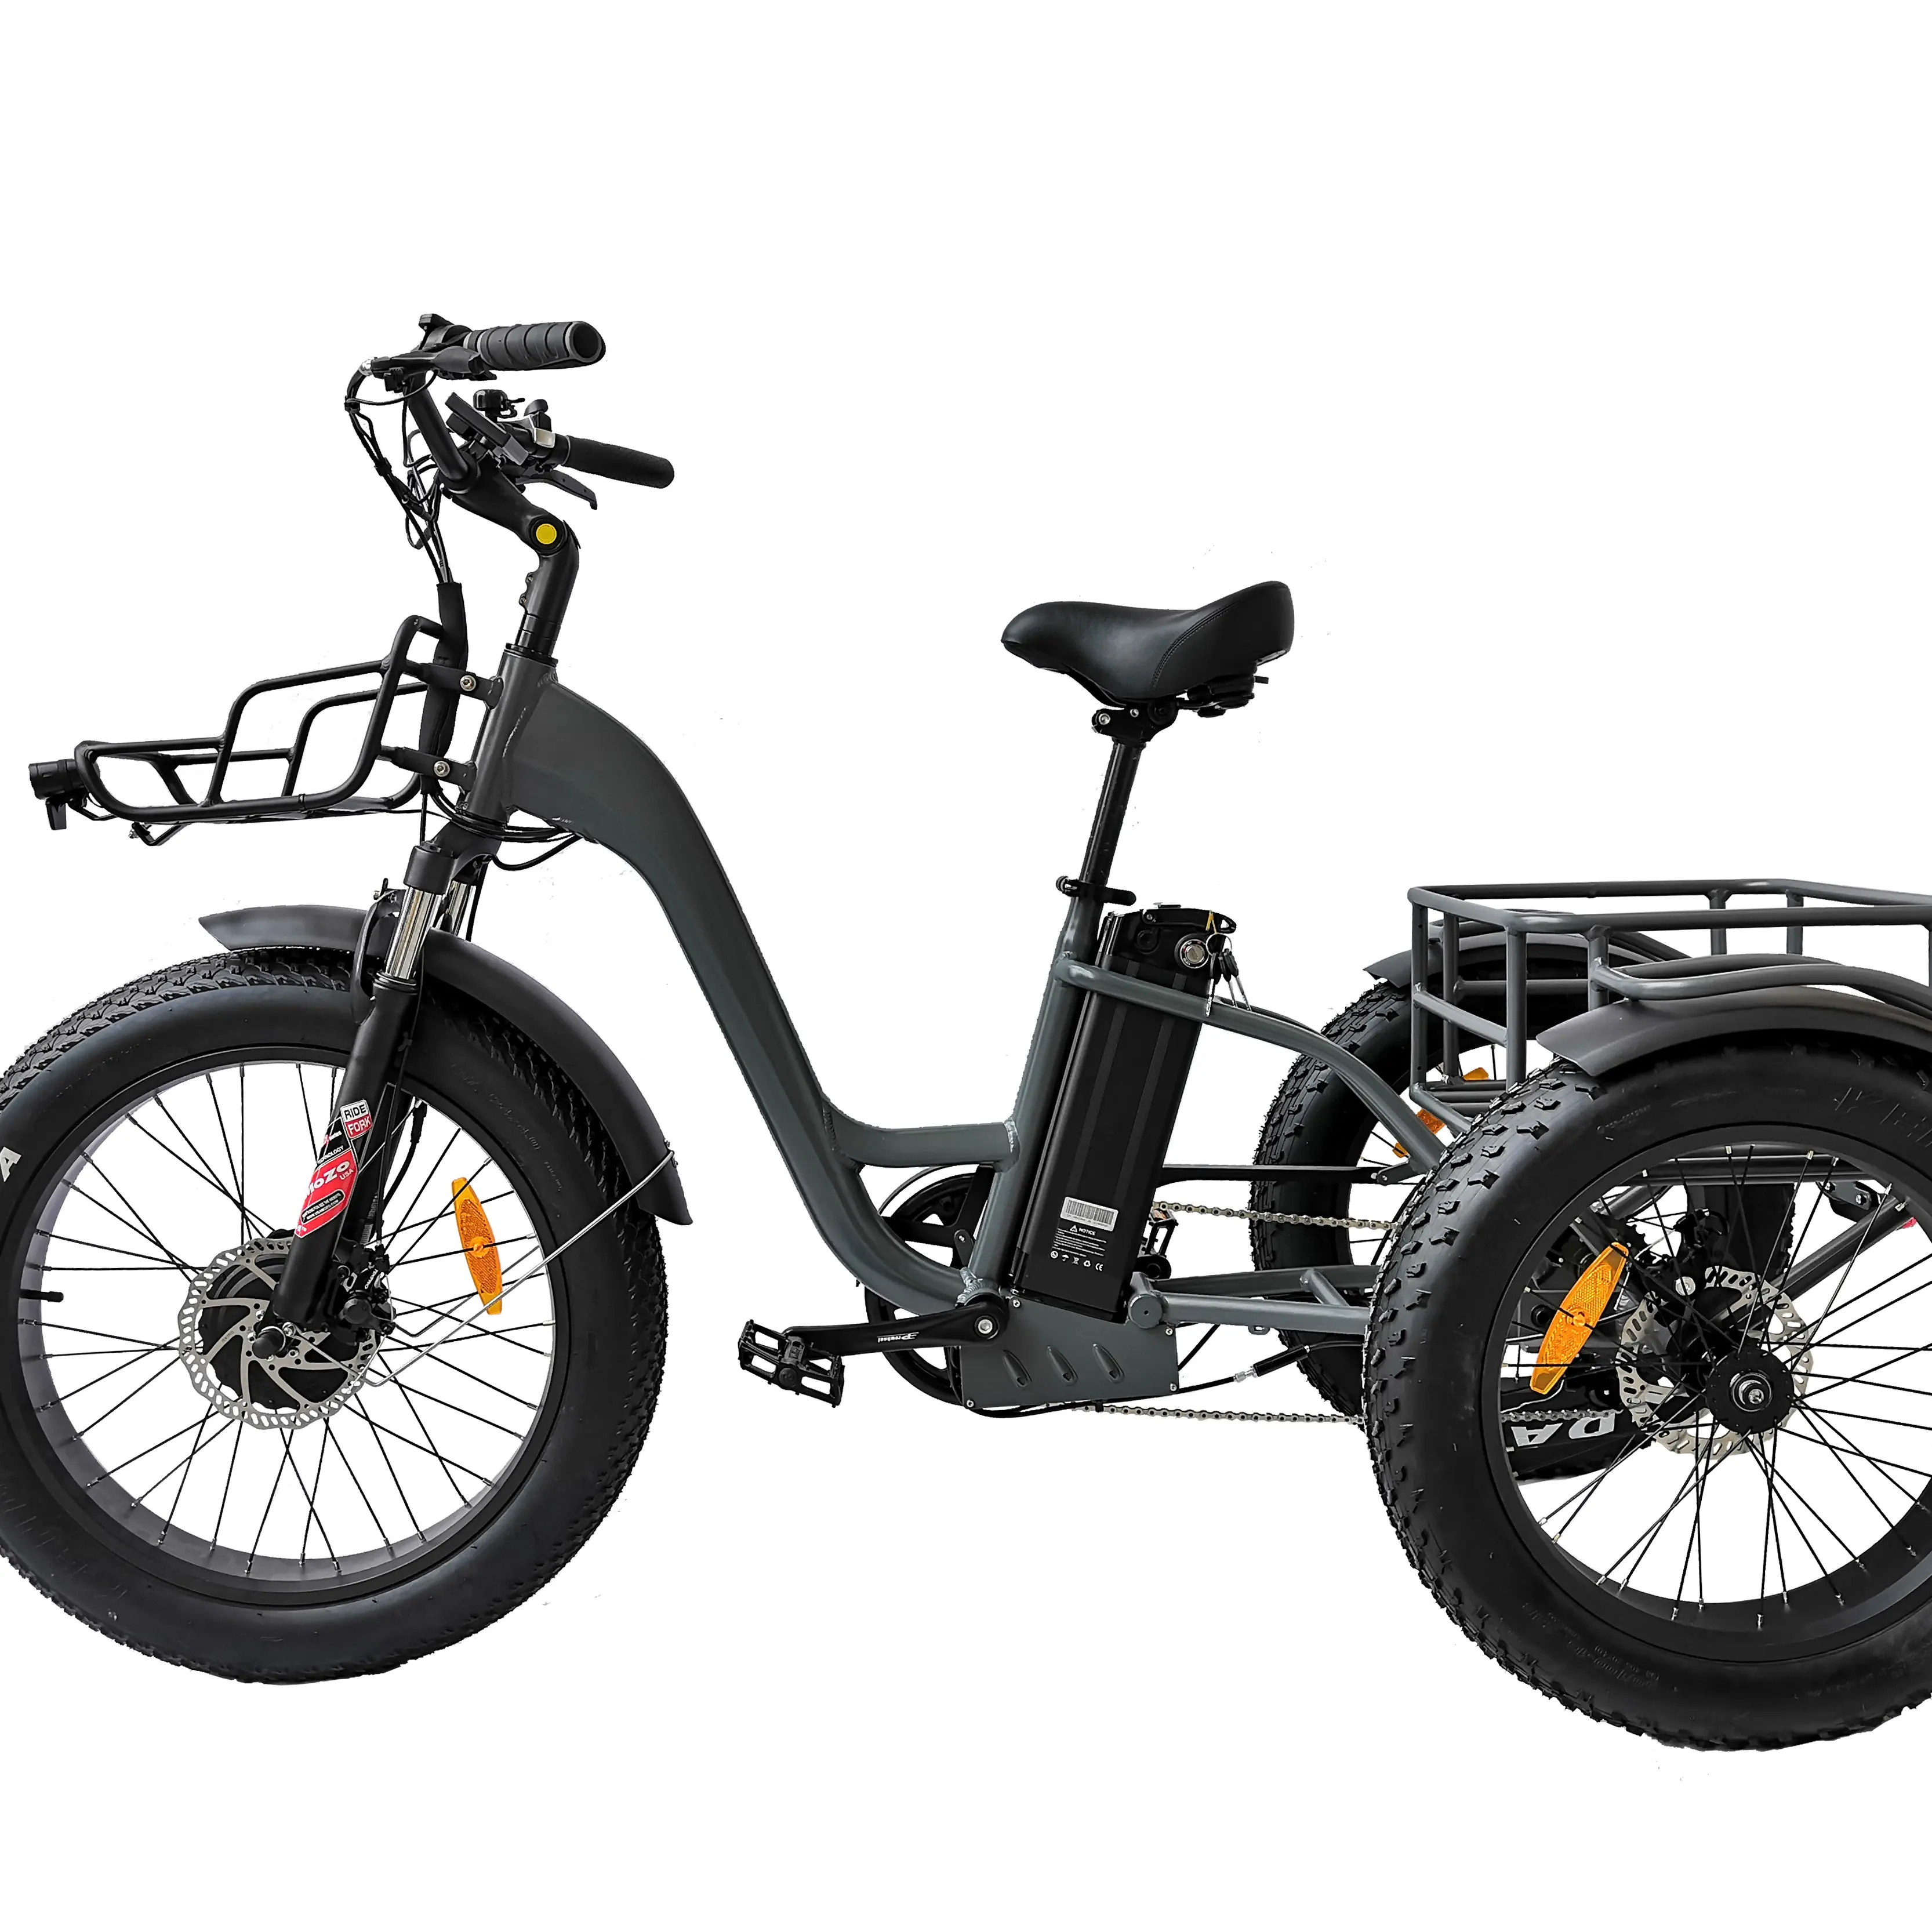 QUEENE/24 אינץ חדש ממונע חשמלי תלת אופן עם EN15194/זול חשמלי trike/ 3 גלגל אופניים חשמליים עם דוושות